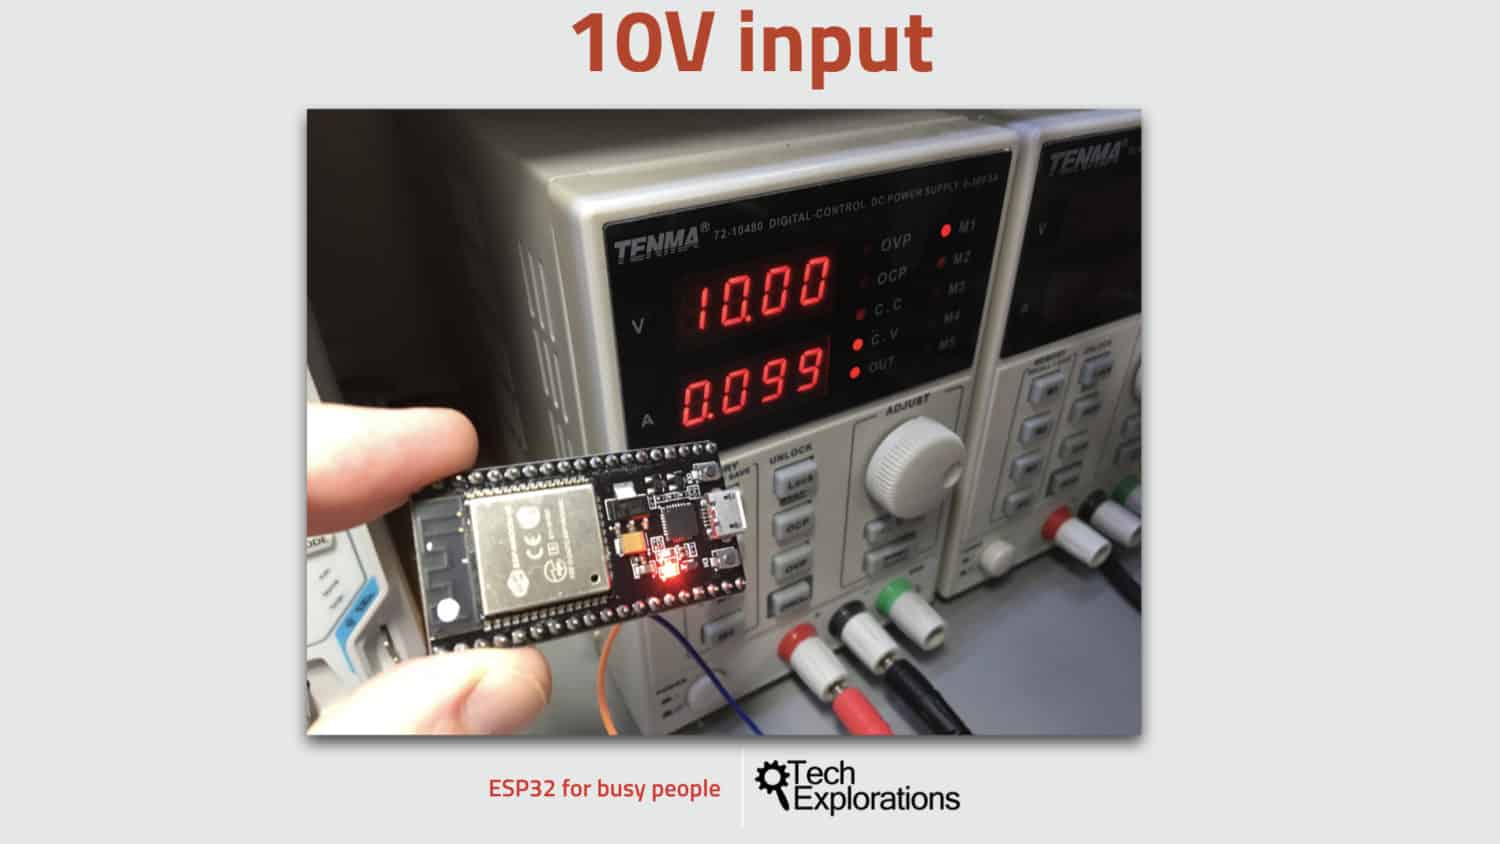 PIN description of ESP32 1. Power Supply Pins: VCC: This pin serves as